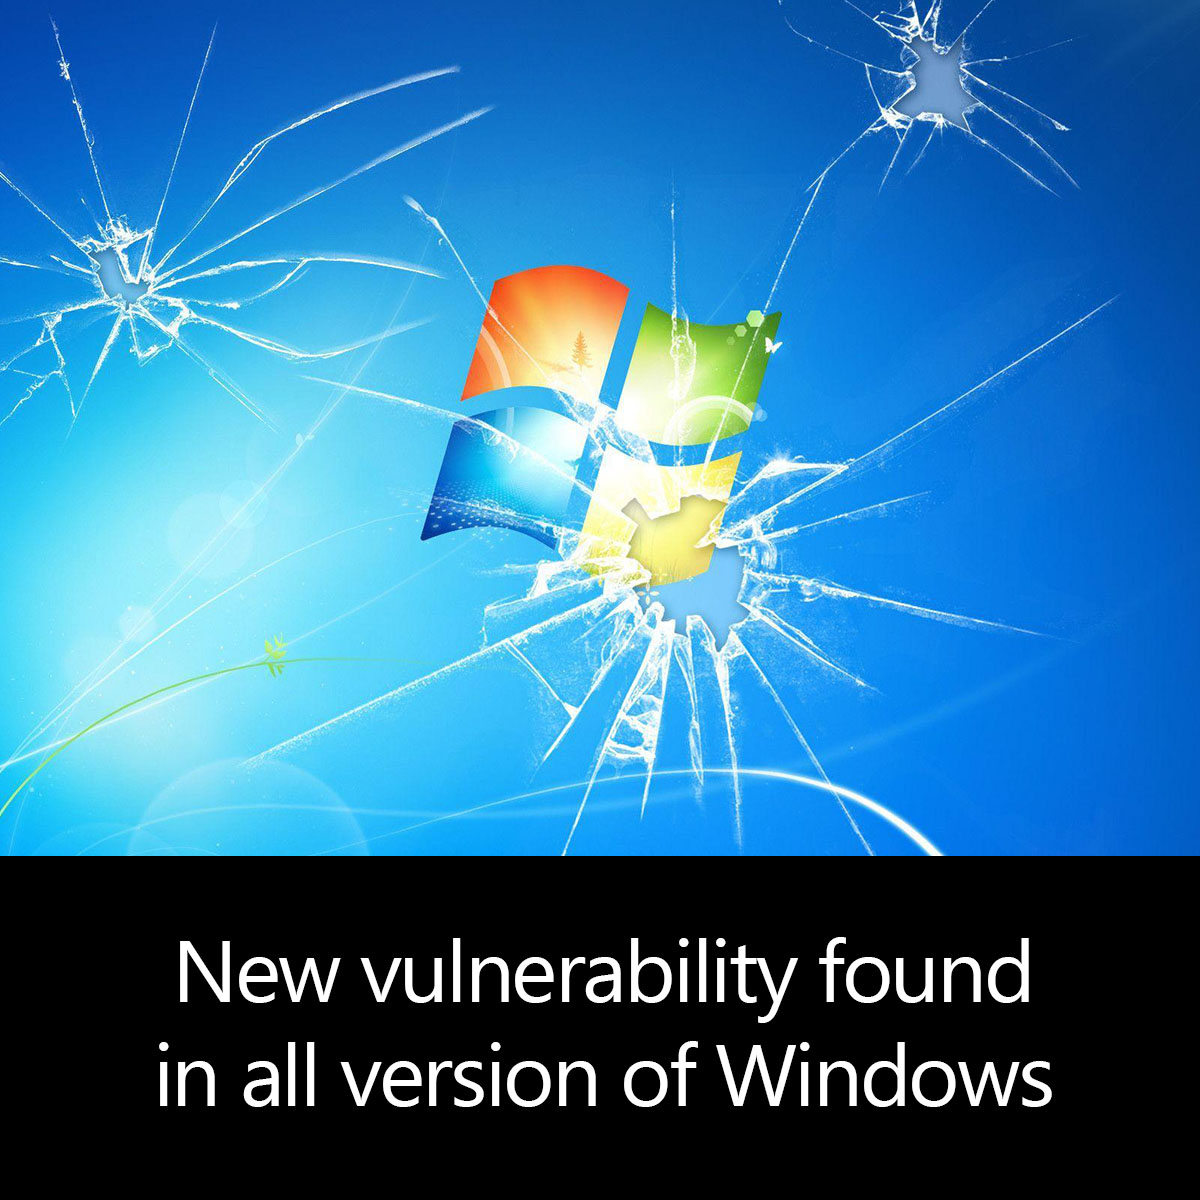 New vulnerability found in Windows